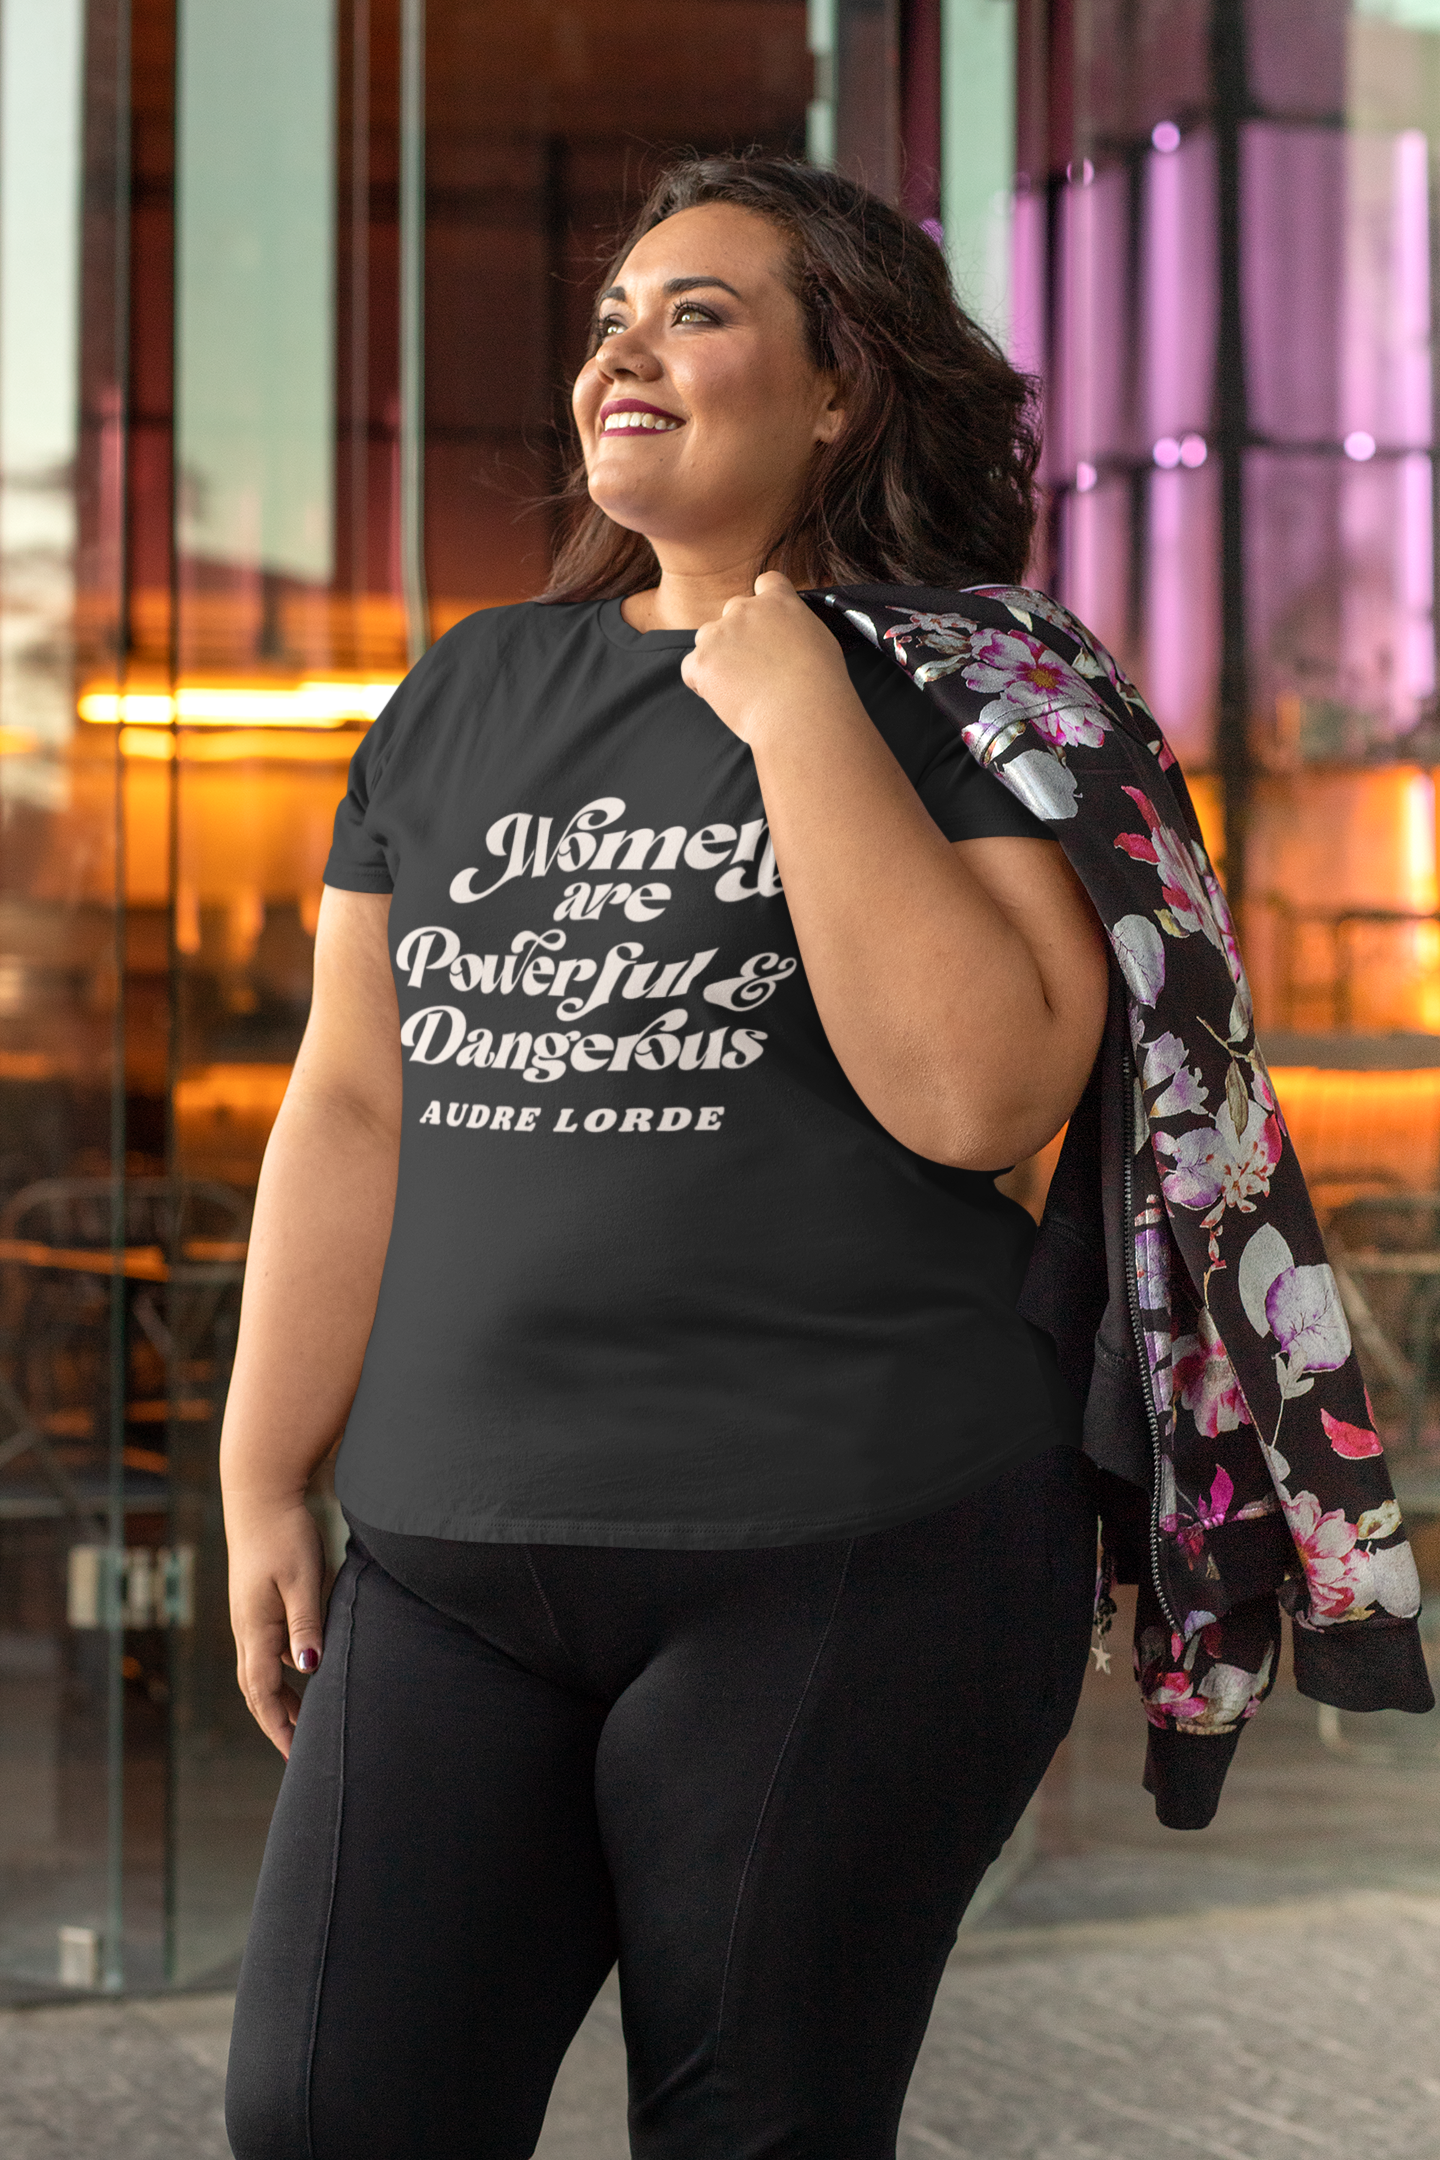 Feminist Quote Shirt Women are Powerful and Dangerous Shirt – Bad